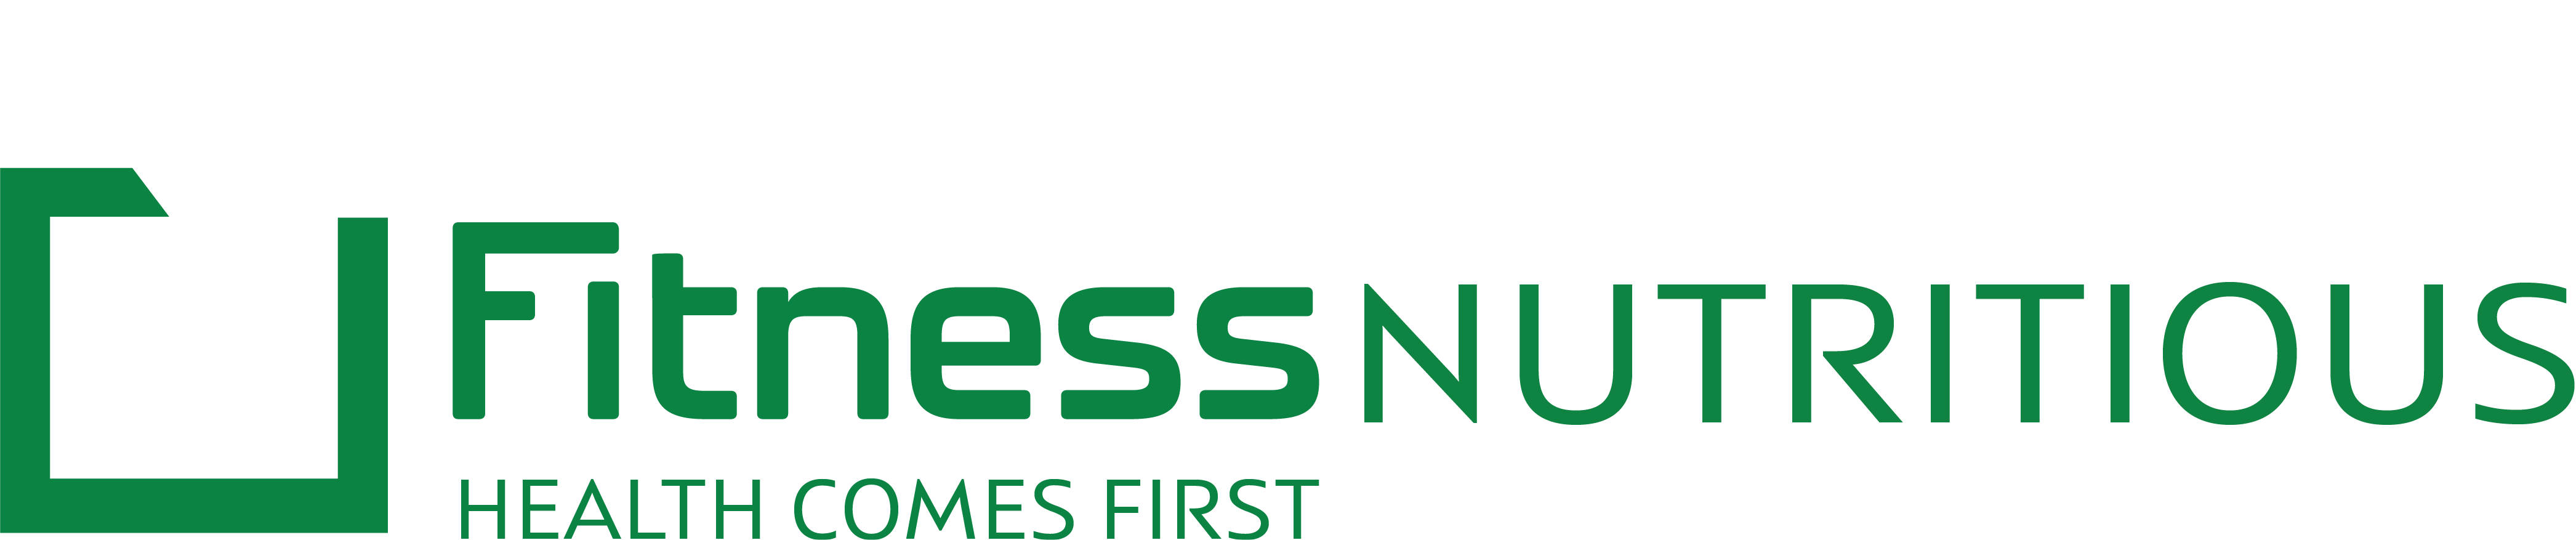 Fitness_Nutritious_Logo